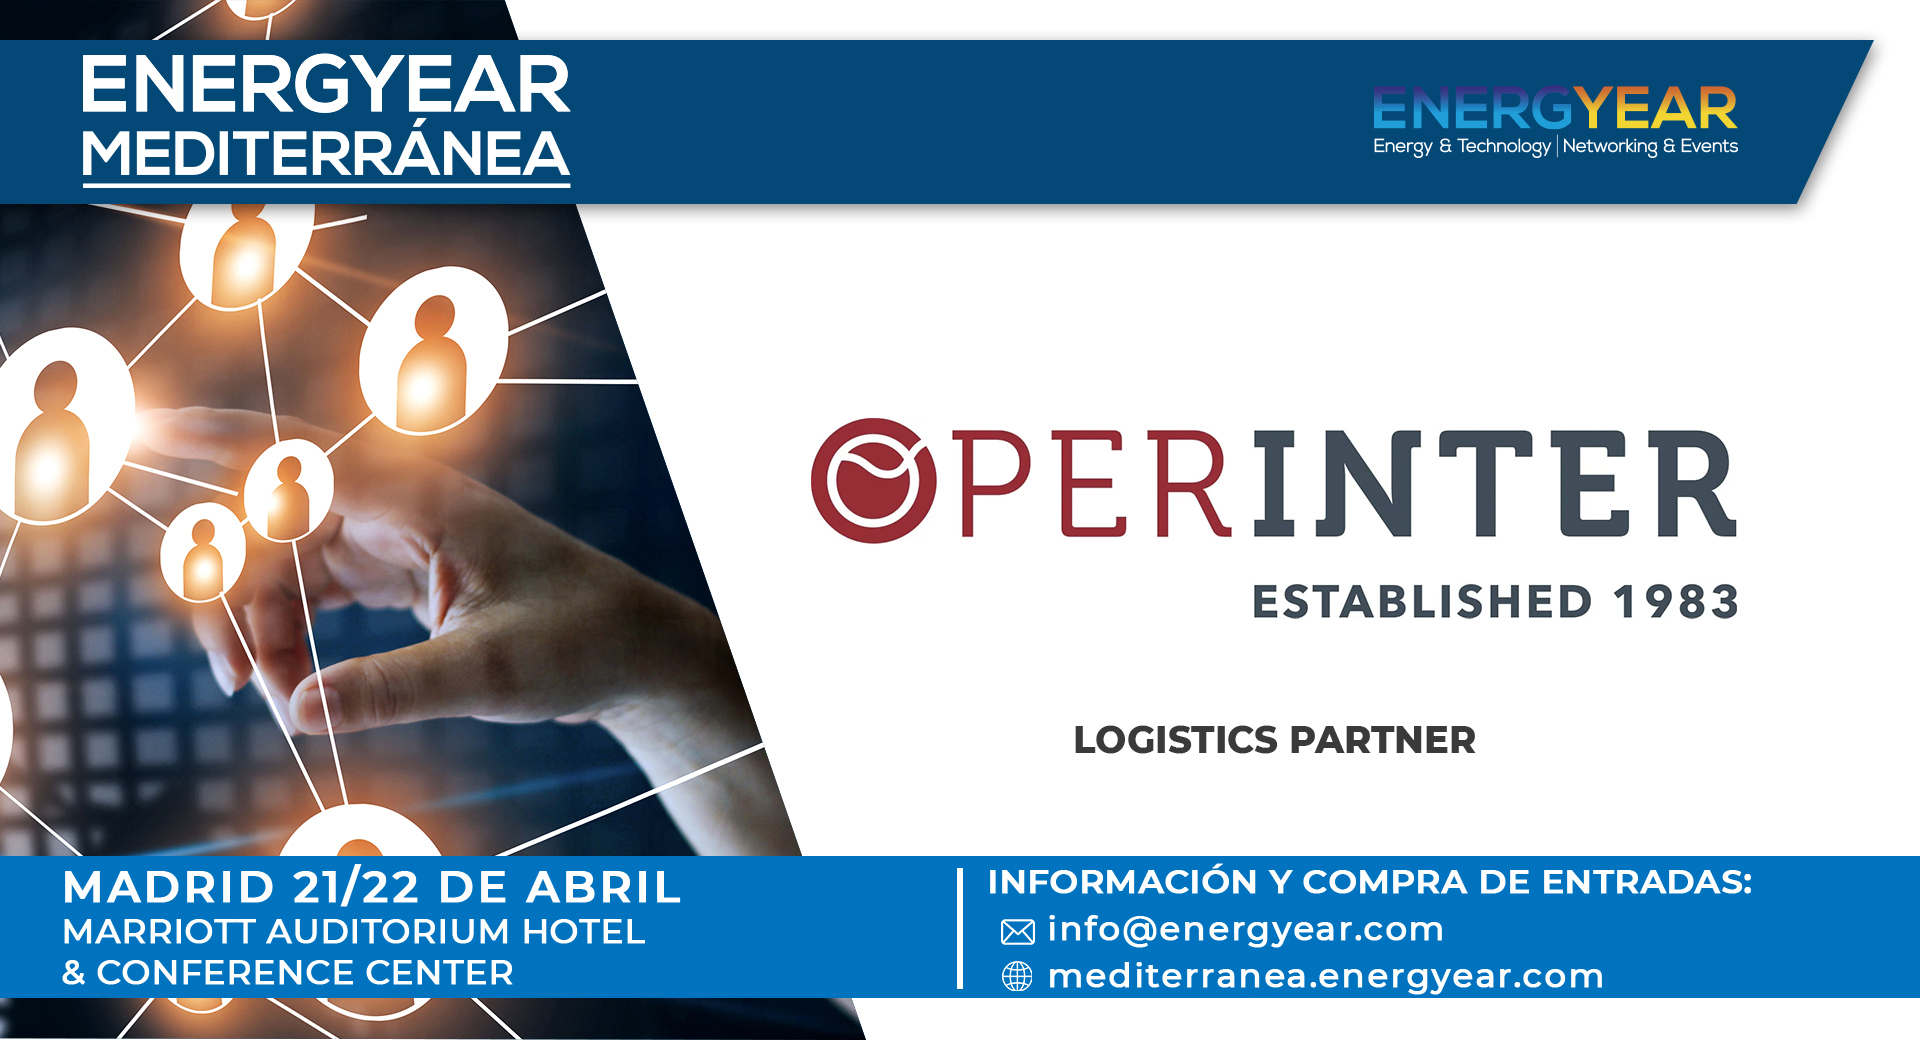 Operinter participates in Energyear Mediterráneo in Madrid.